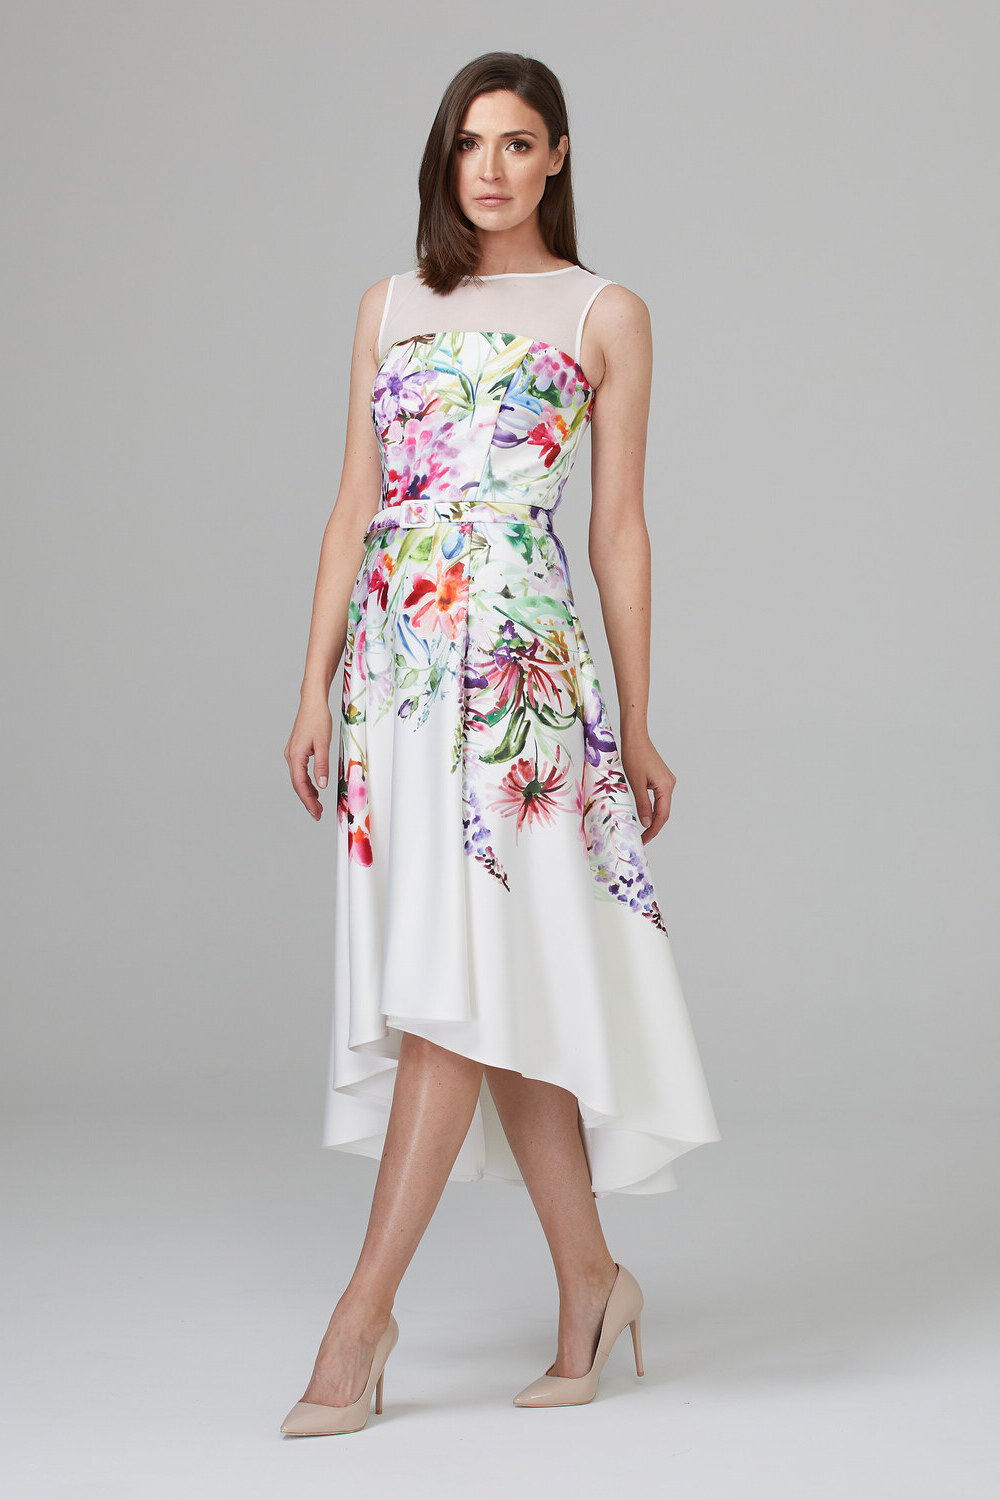 Joseph Ribkoff Dress Style 201219. Vanilla/multi